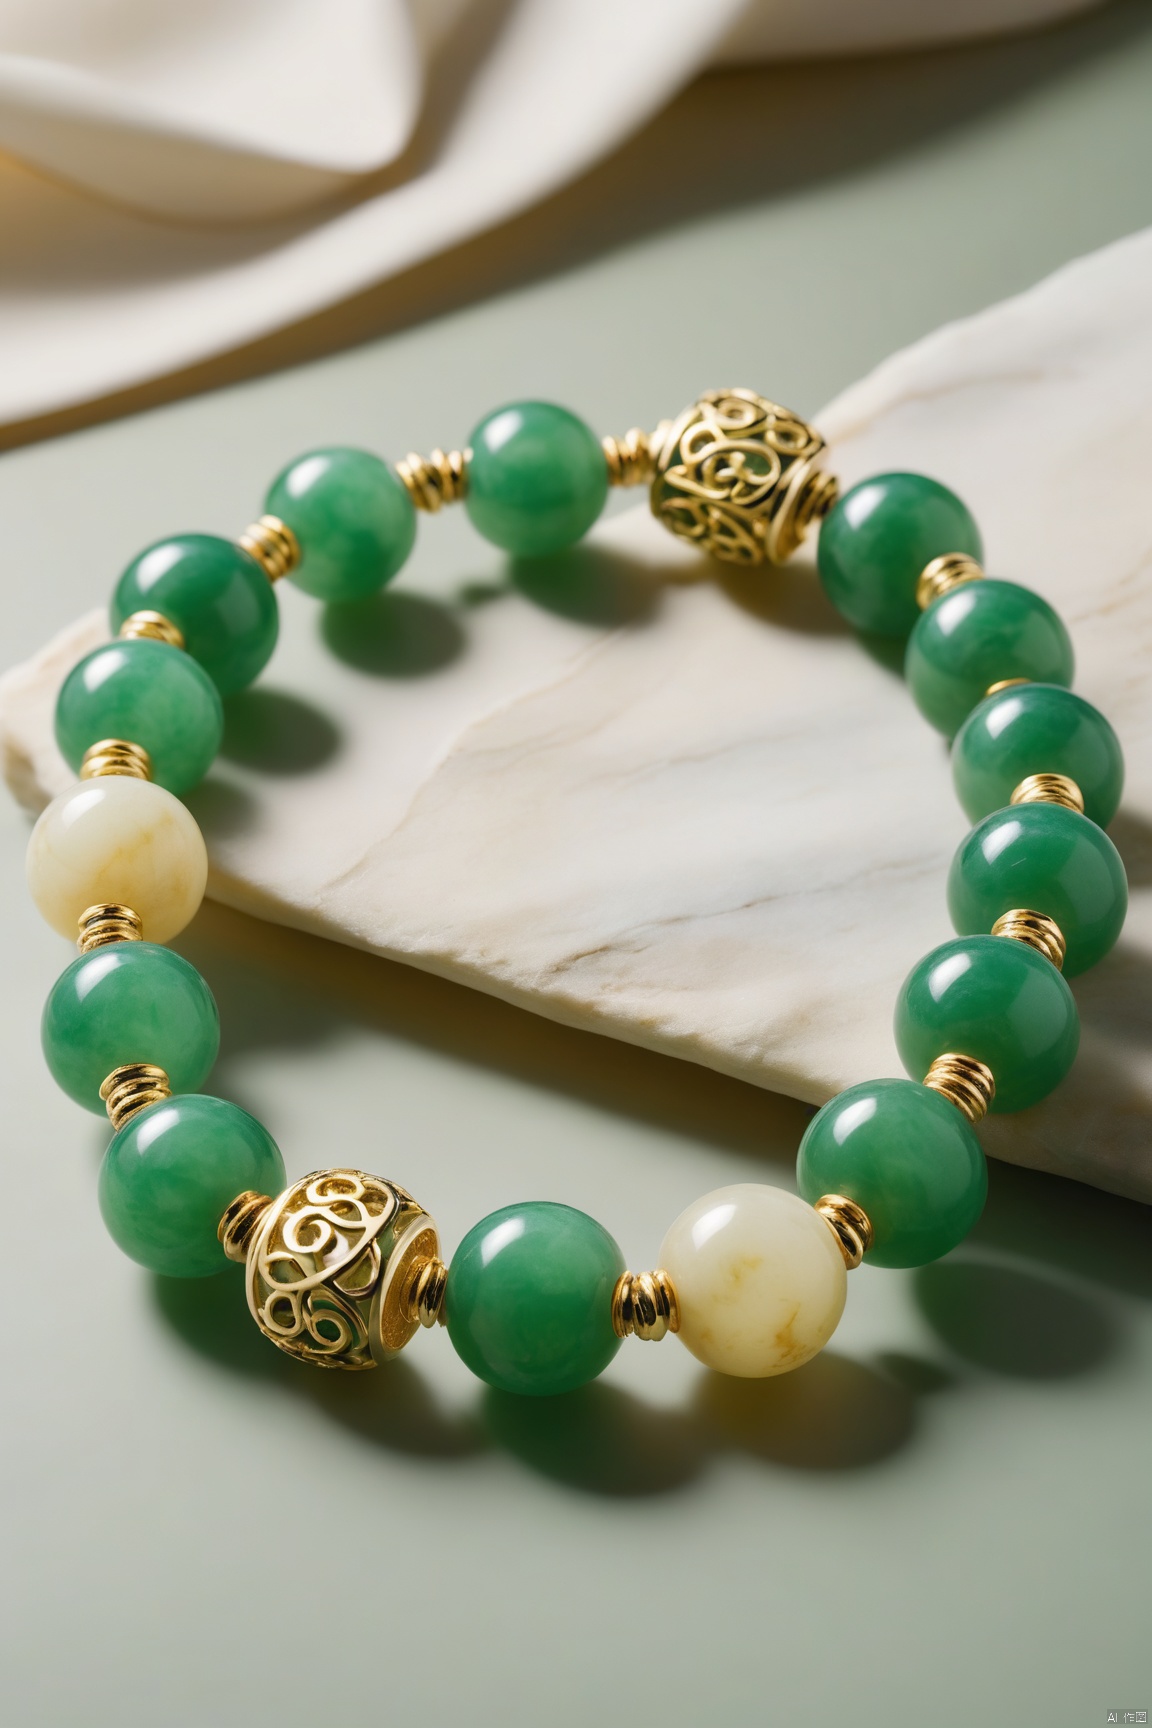  HUBG_Chinese_Jade,bracelet